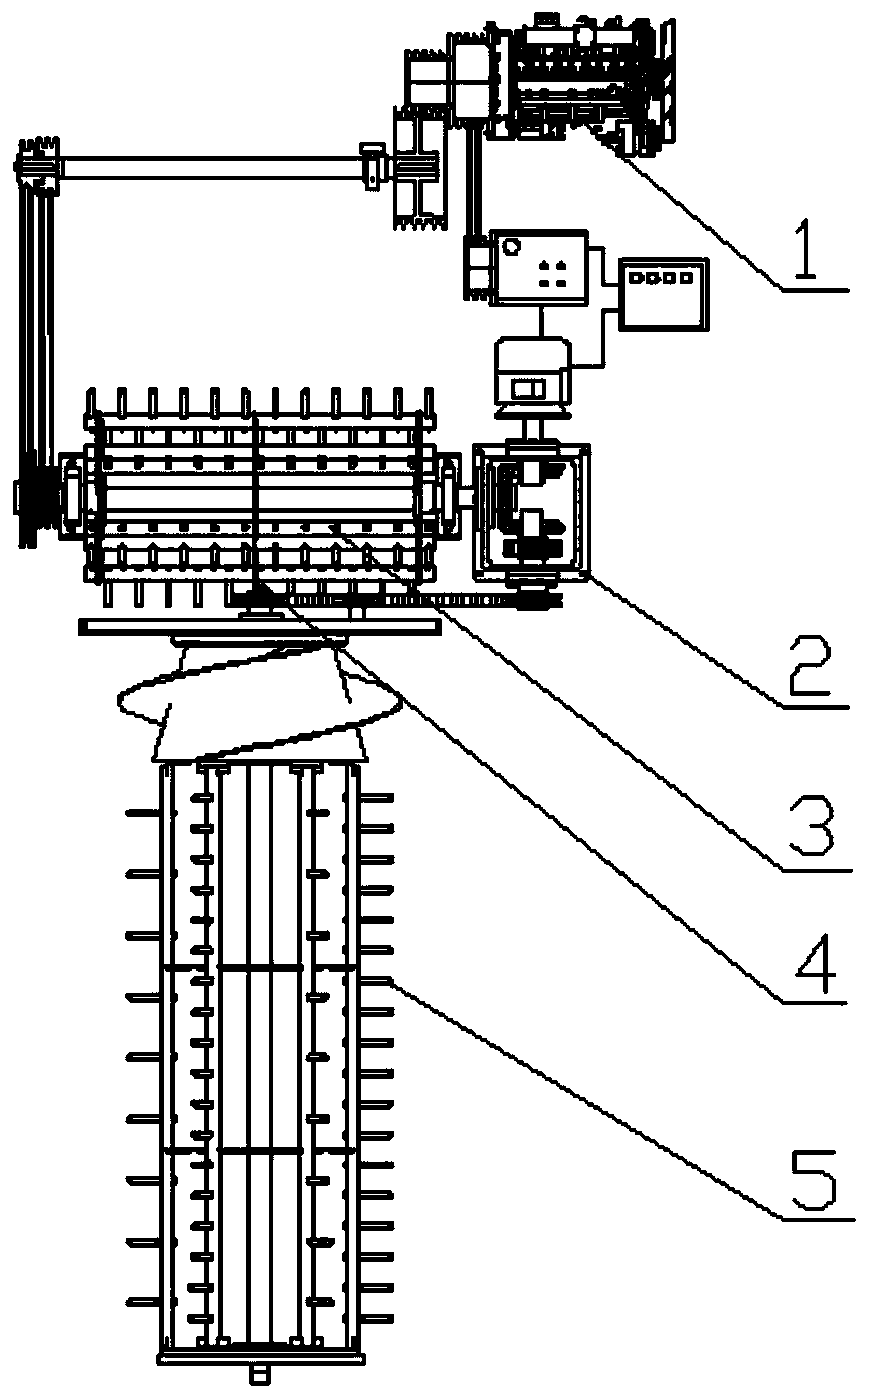 Hybrid power transmission system of longitudinal flow cutting threshing device and harvesting machine